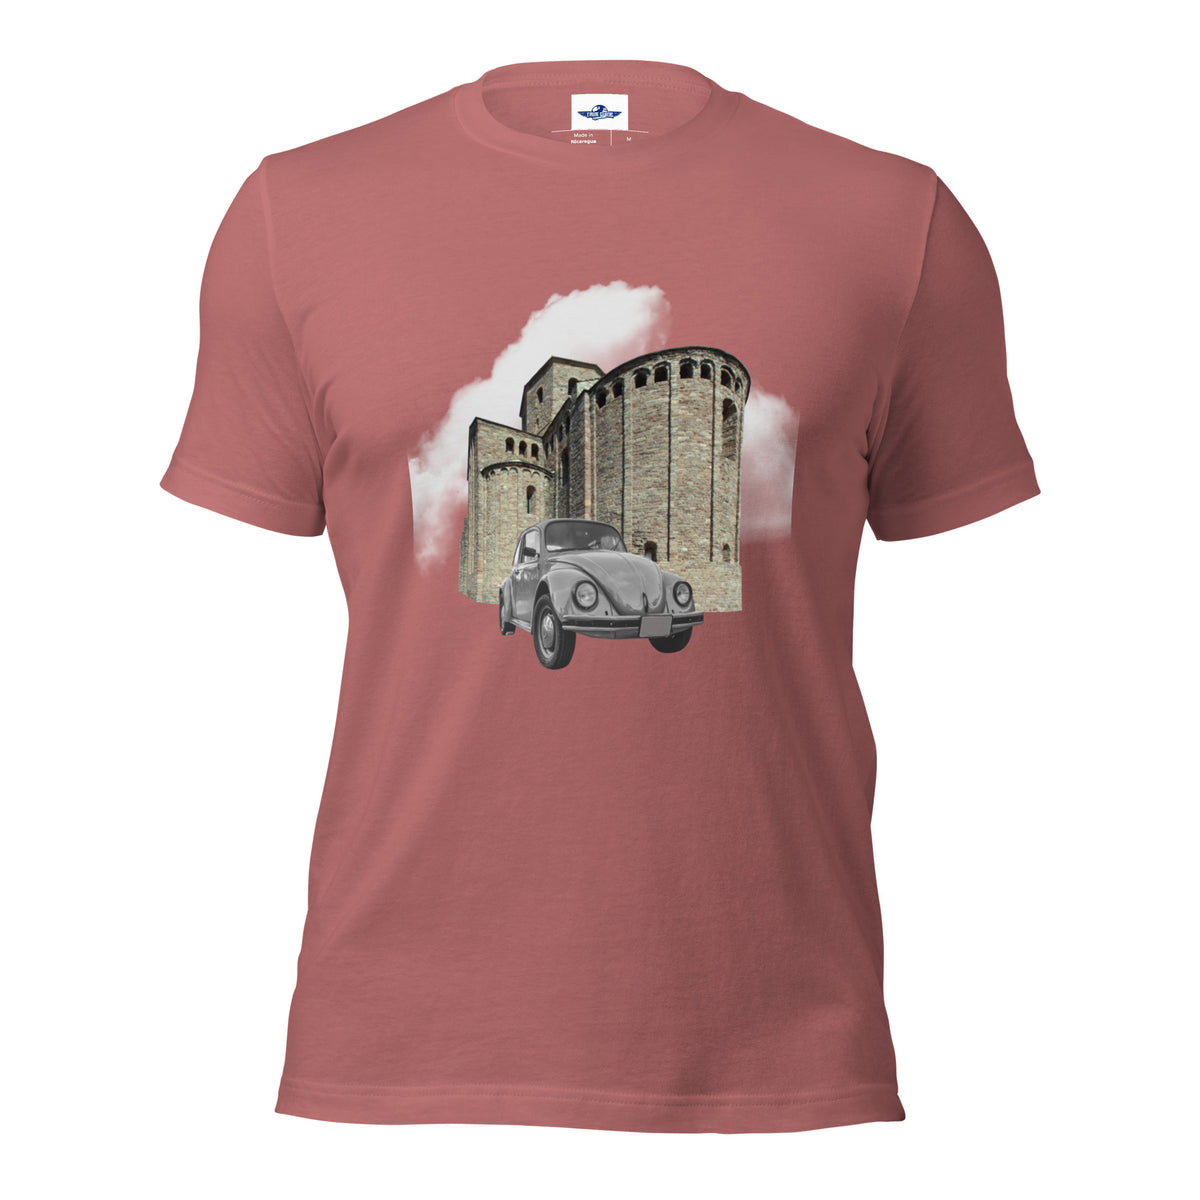 Cloudy Times T-Shirt